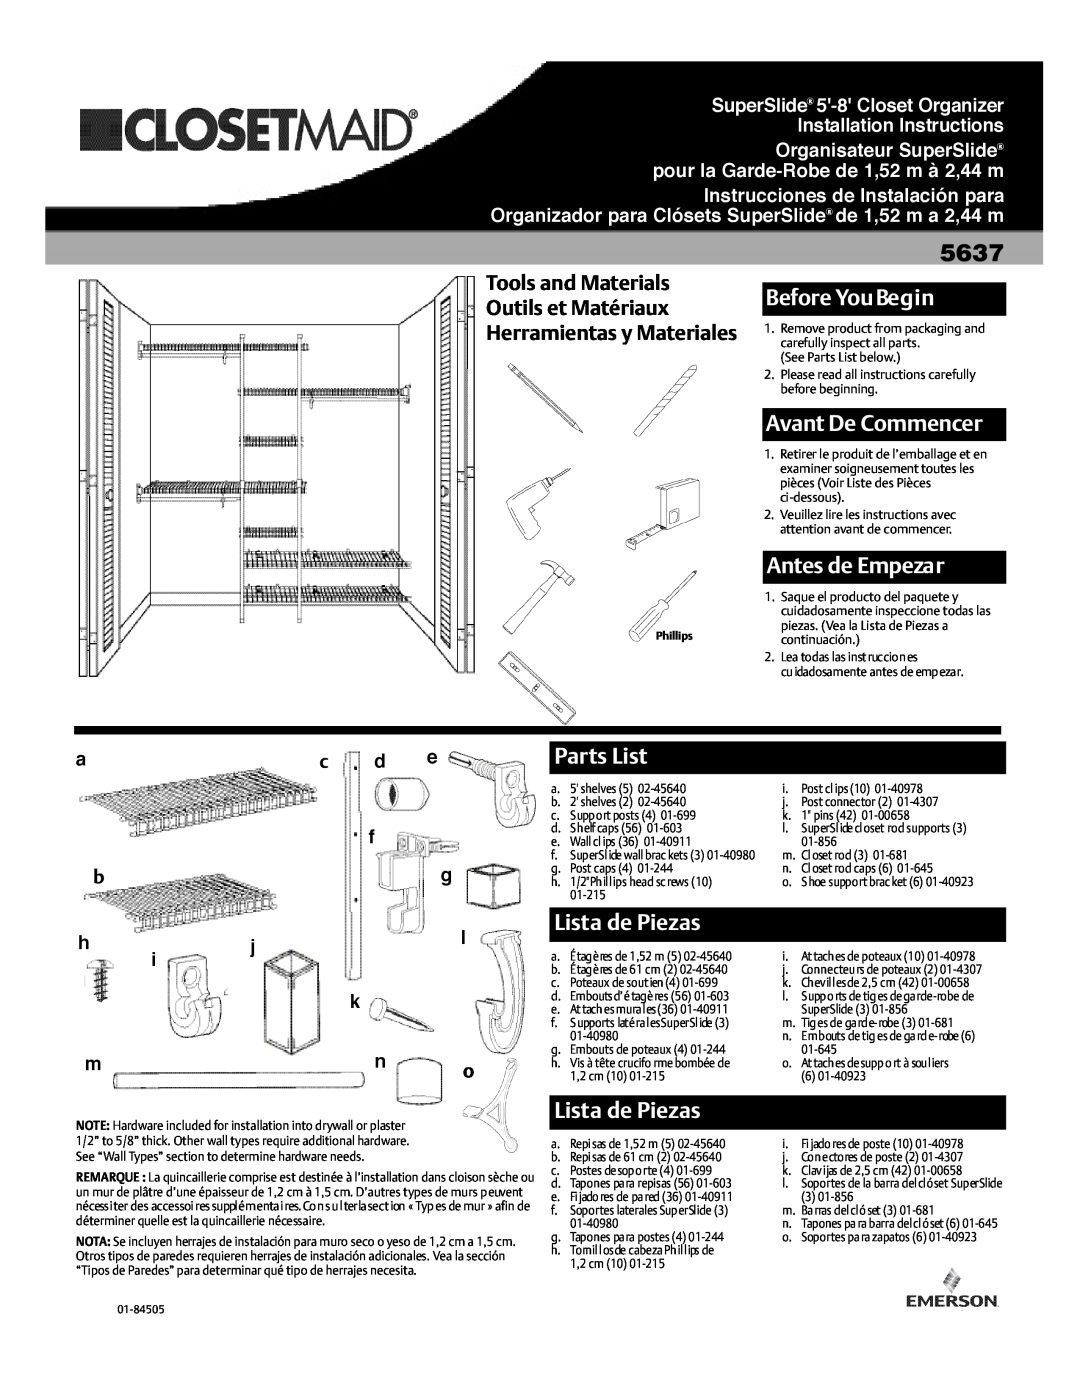 Emerson 5637 installation instructions Before YouBegin, Avant De Commencer, Antes de Empezar, Parts List, Lista de Piezas 